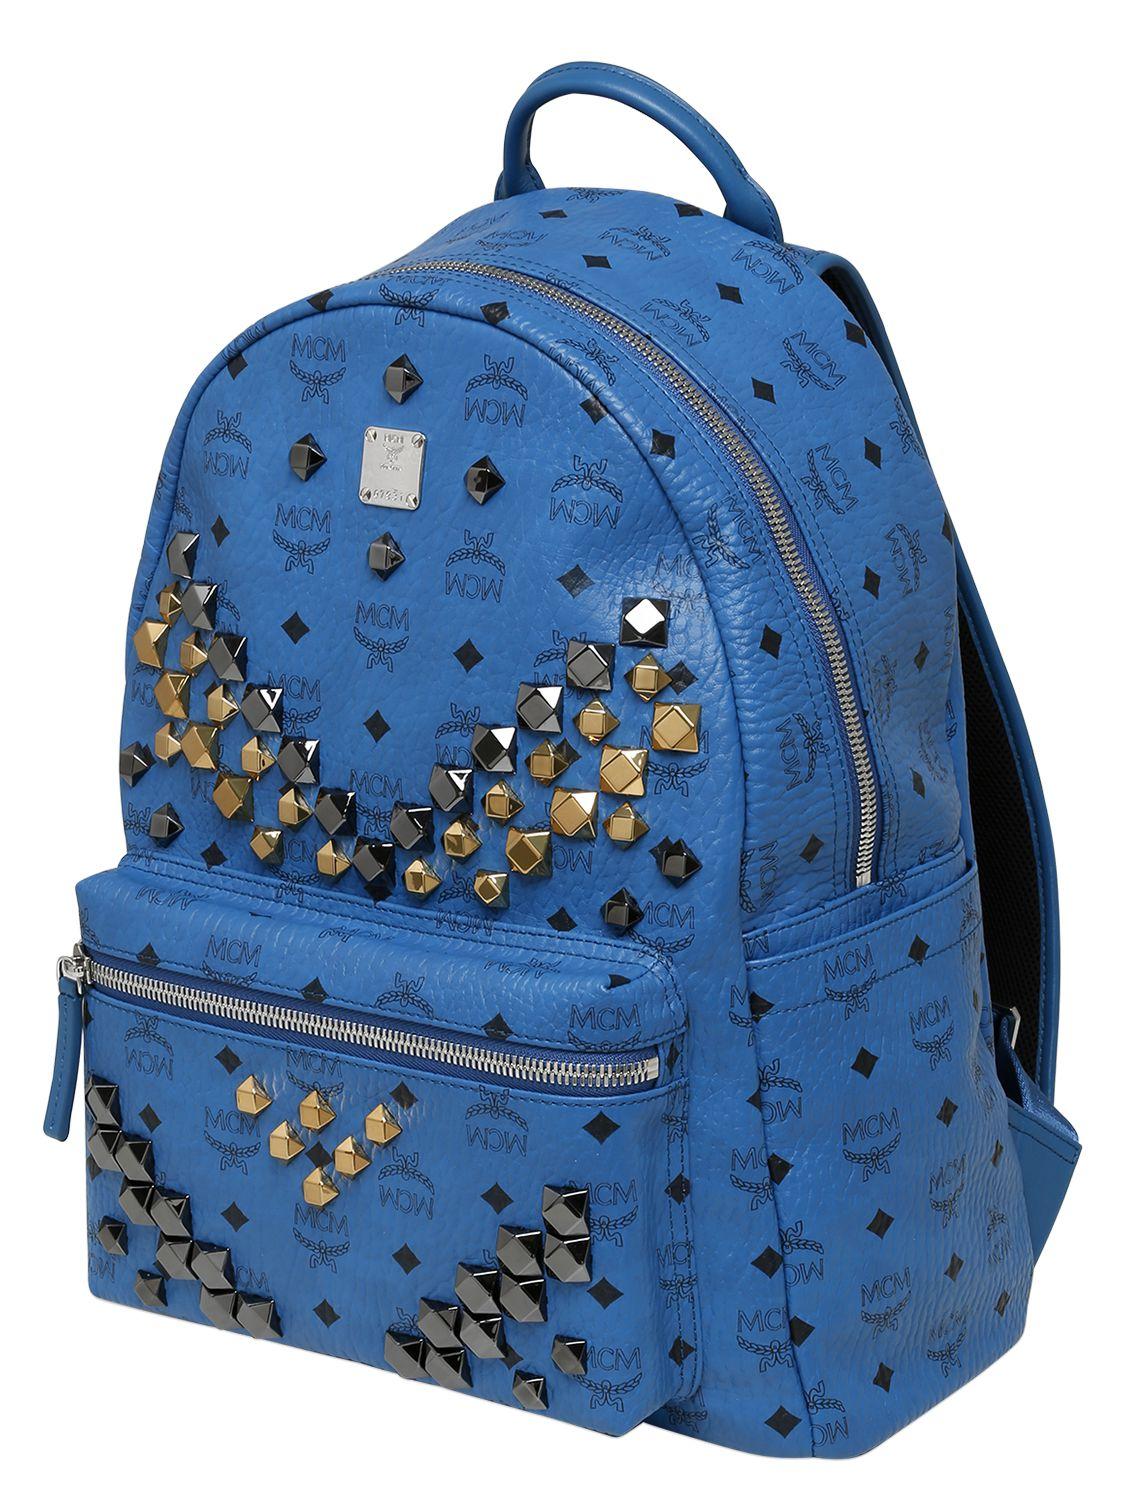 Lyst - Mcm Medium M Studs Stark Backpack in Blue